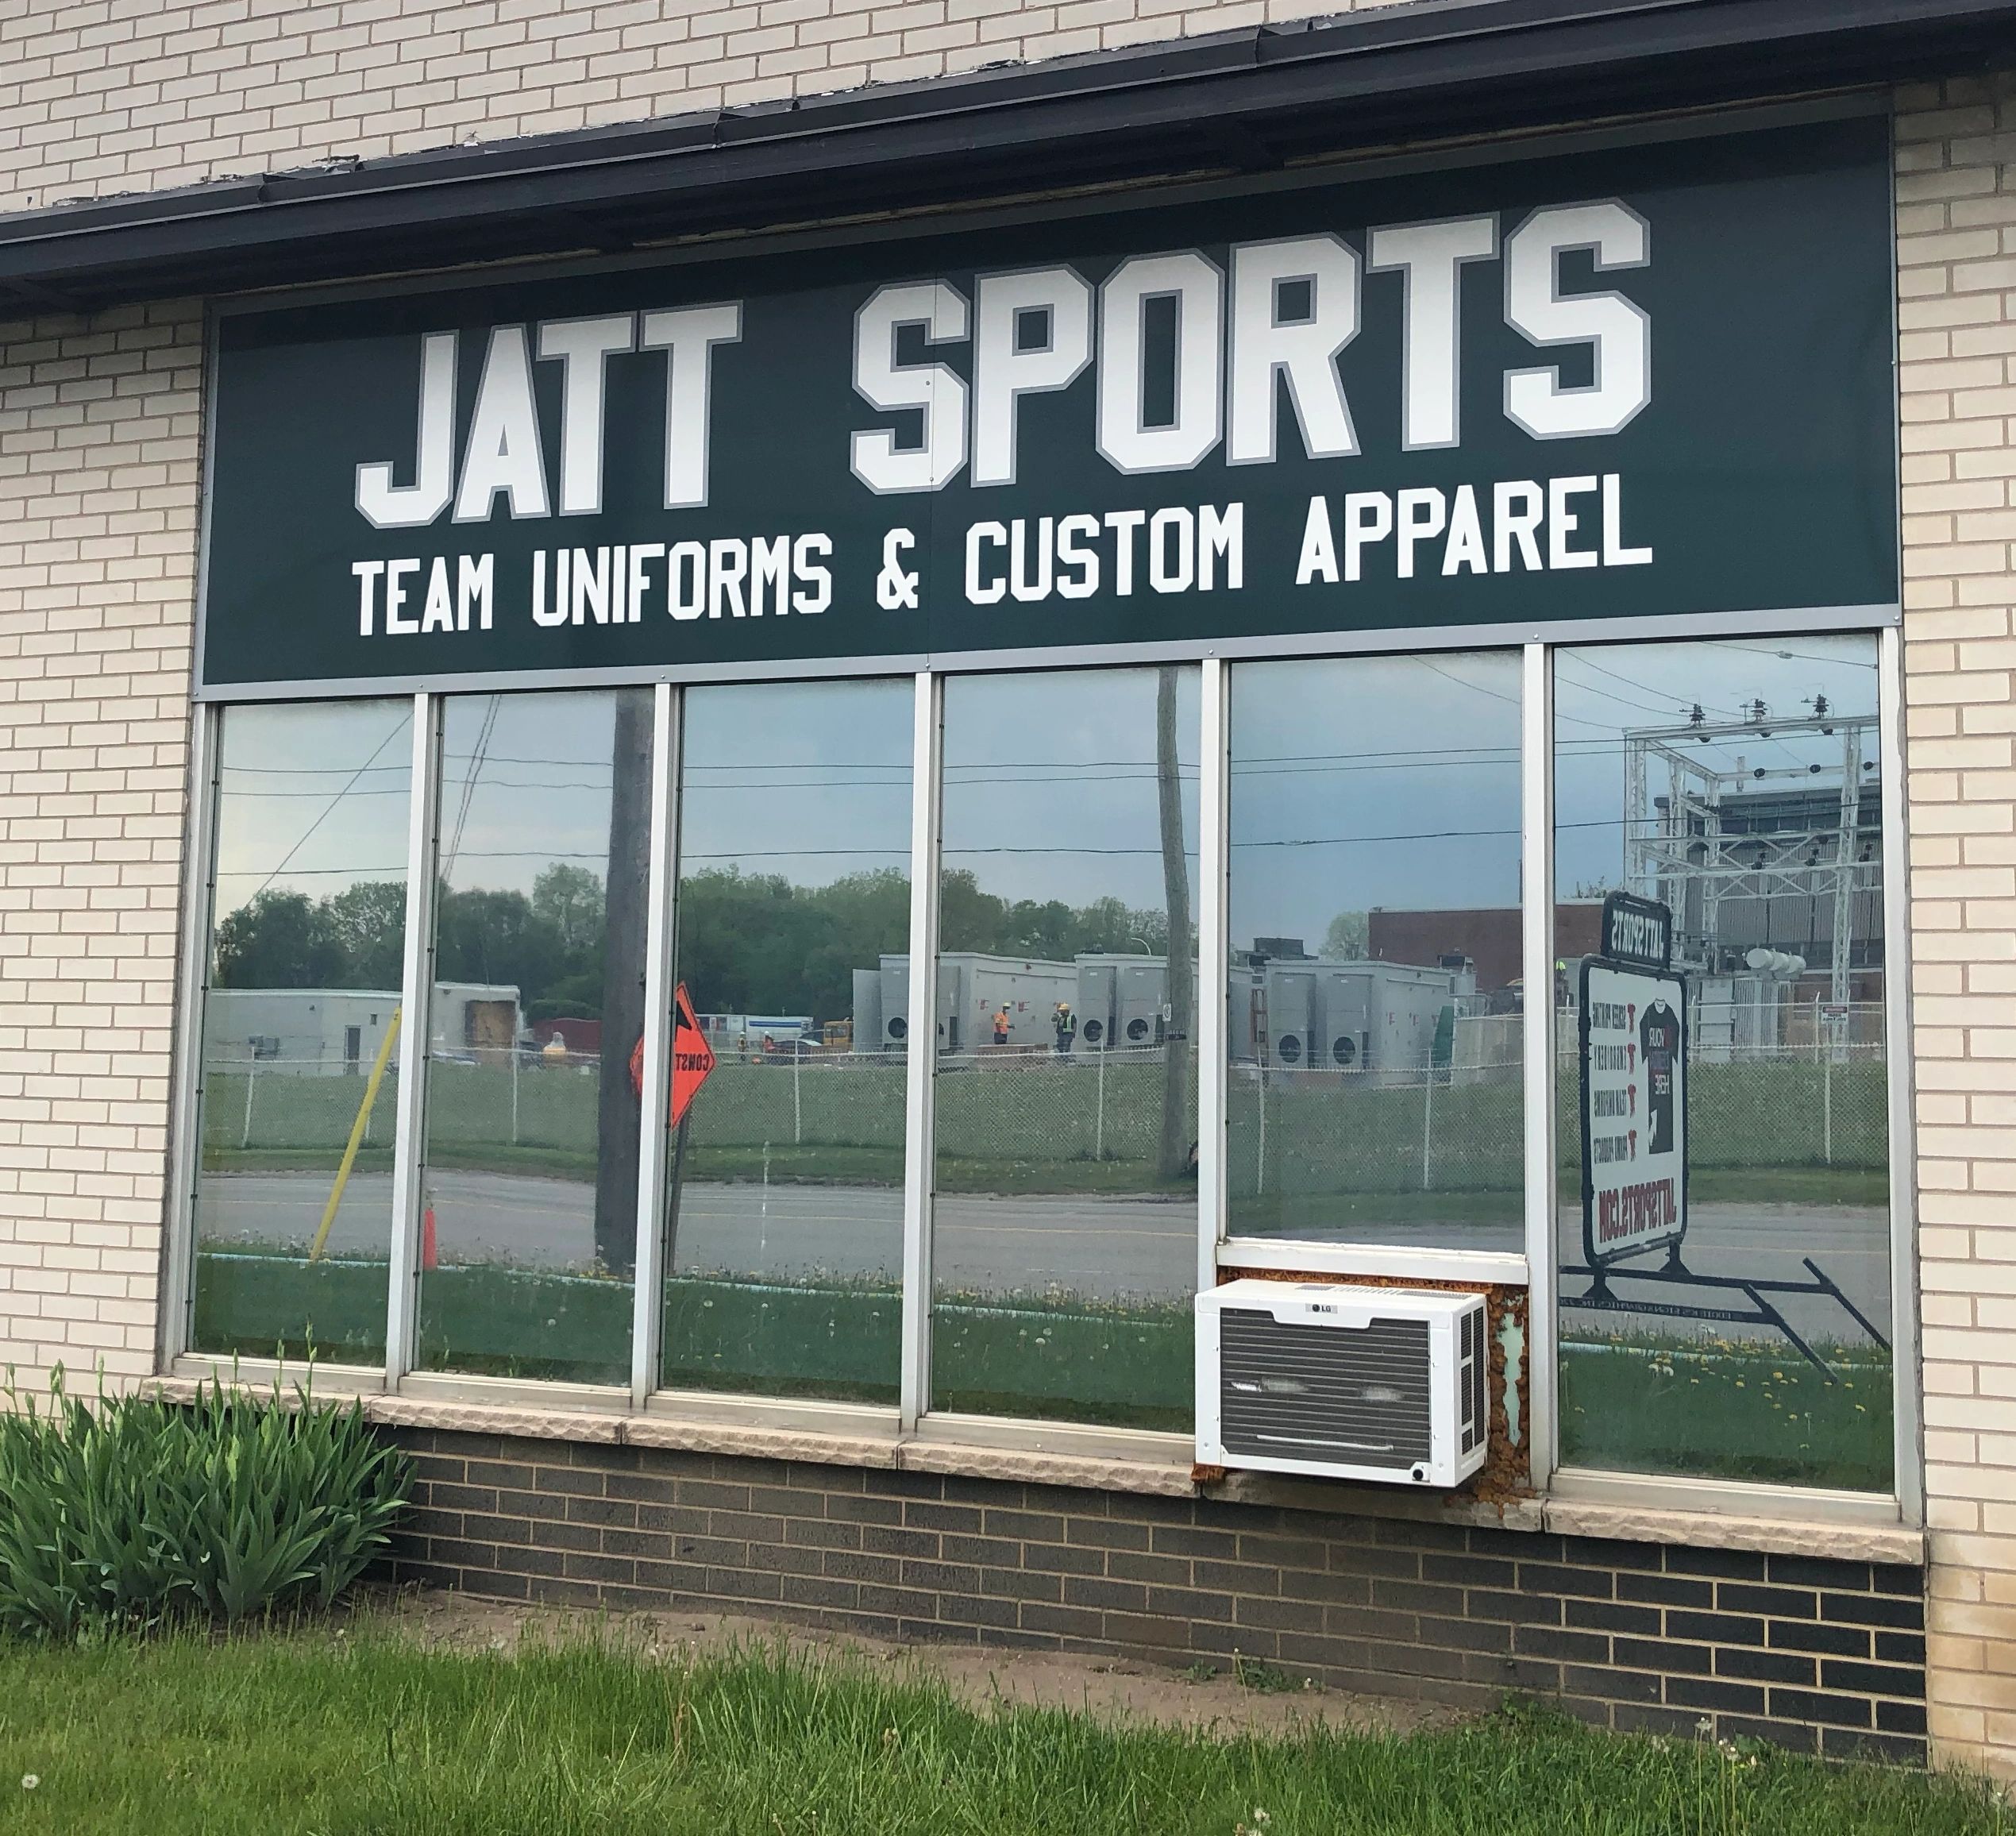 Calgary Flames – Jatt Sports Uniforms